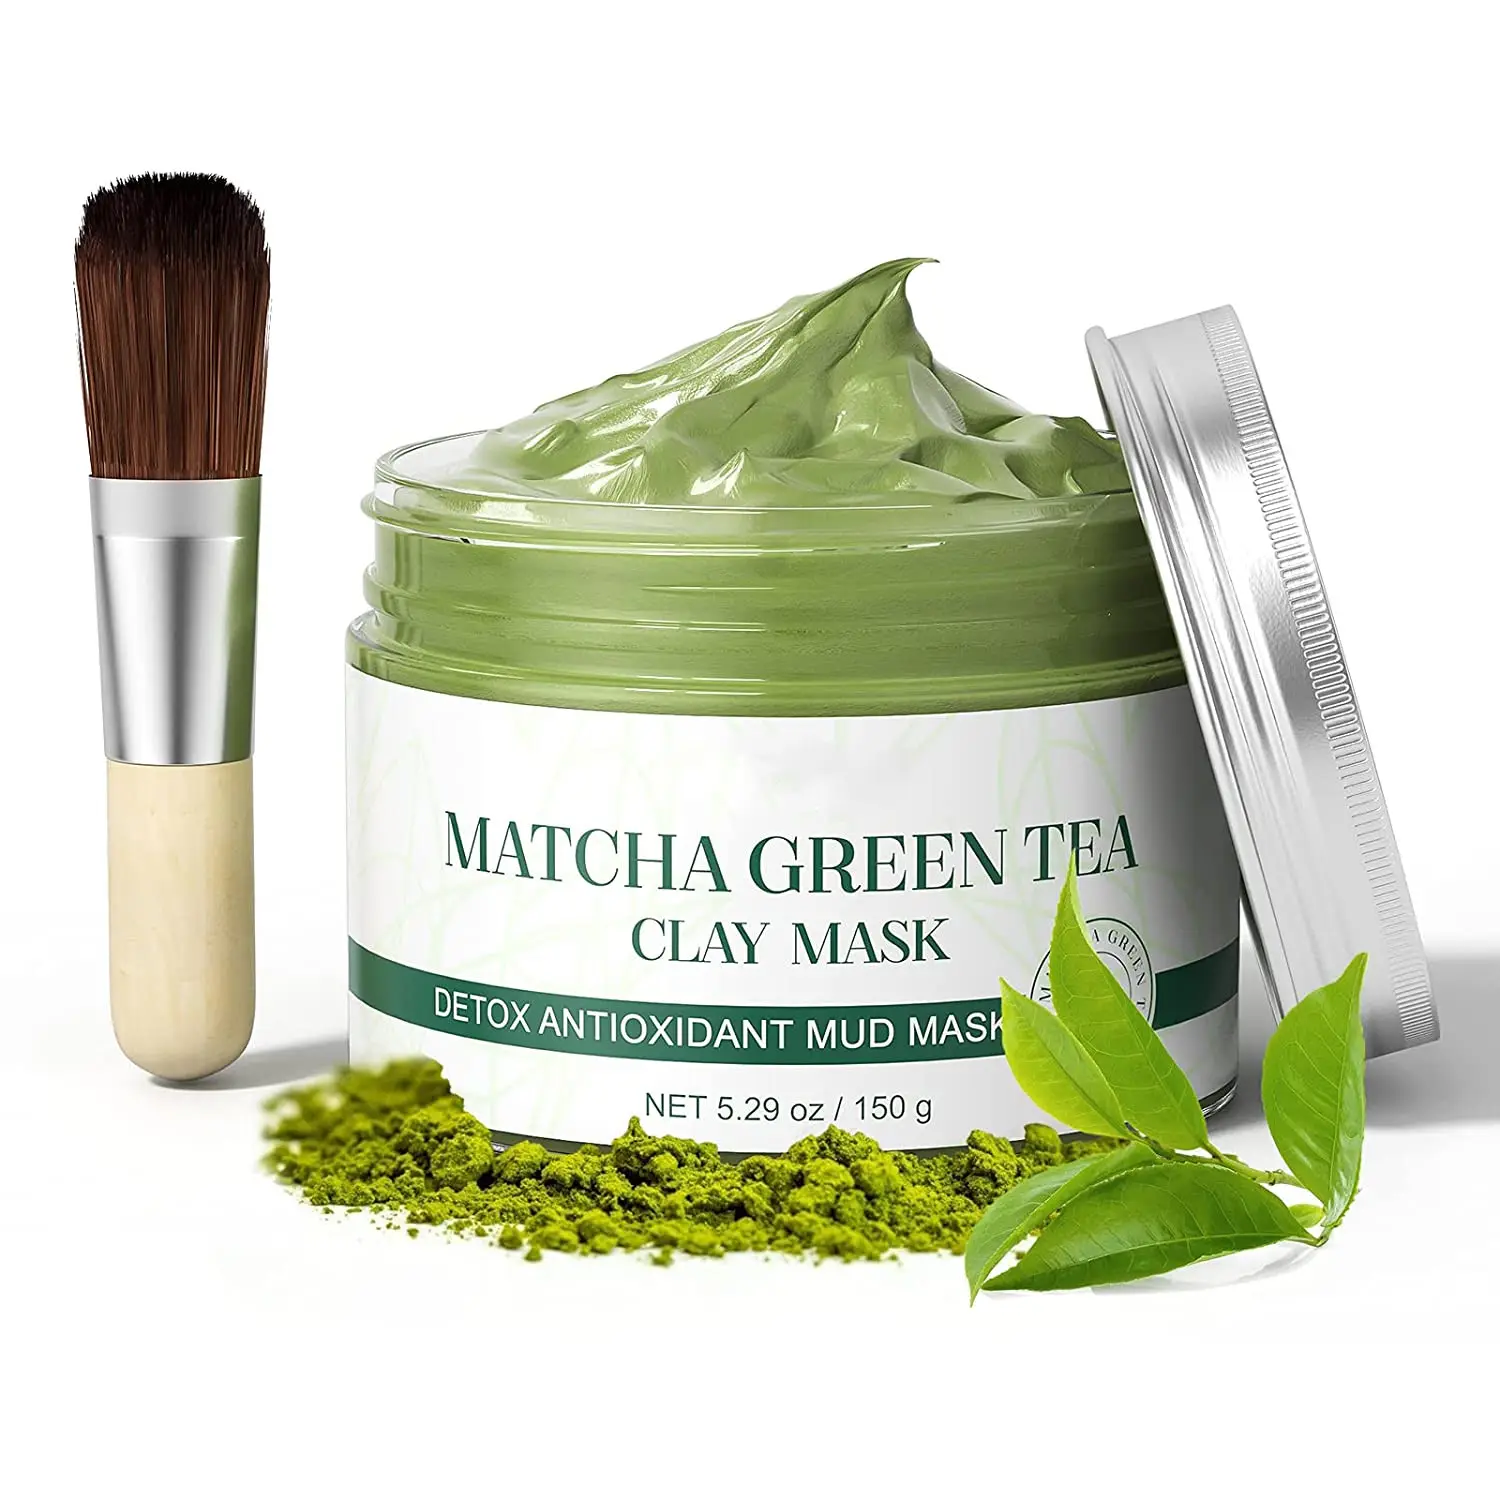 QQLR saf doğa organik Matcha temizleme yağı kontrolü arındırıcı meyve özü akne yüz YEŞİL ÇAY yüz kil maskesi